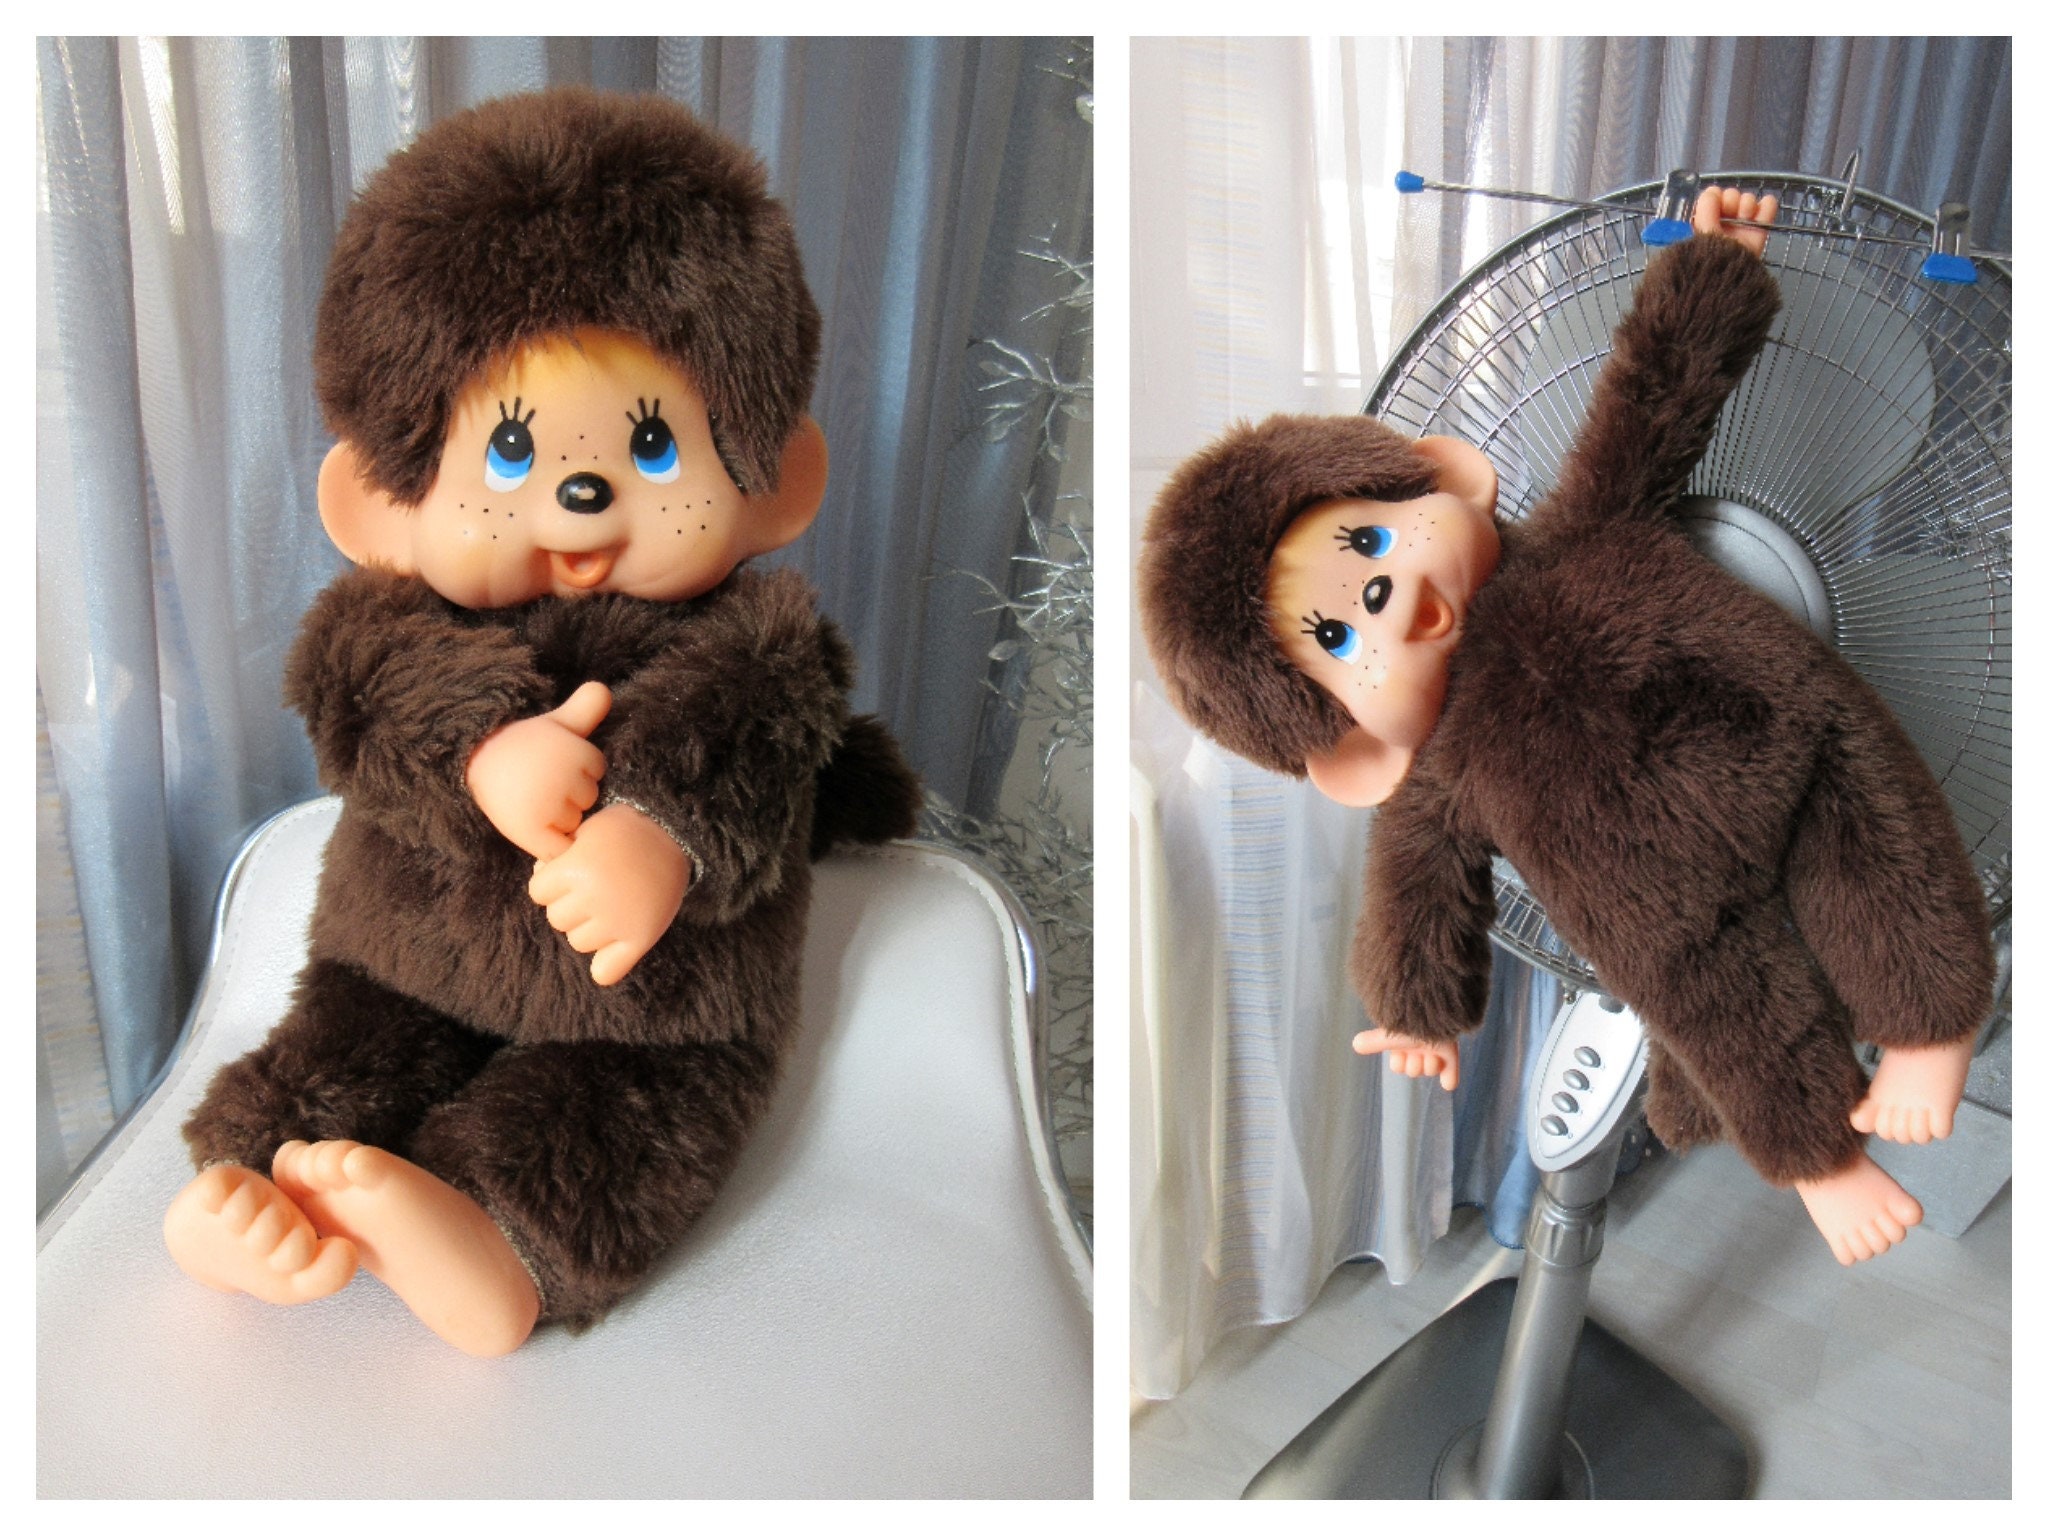 RARE Peluche Figurine Kiki Monchhichi Vintage Monkey -  Denmark